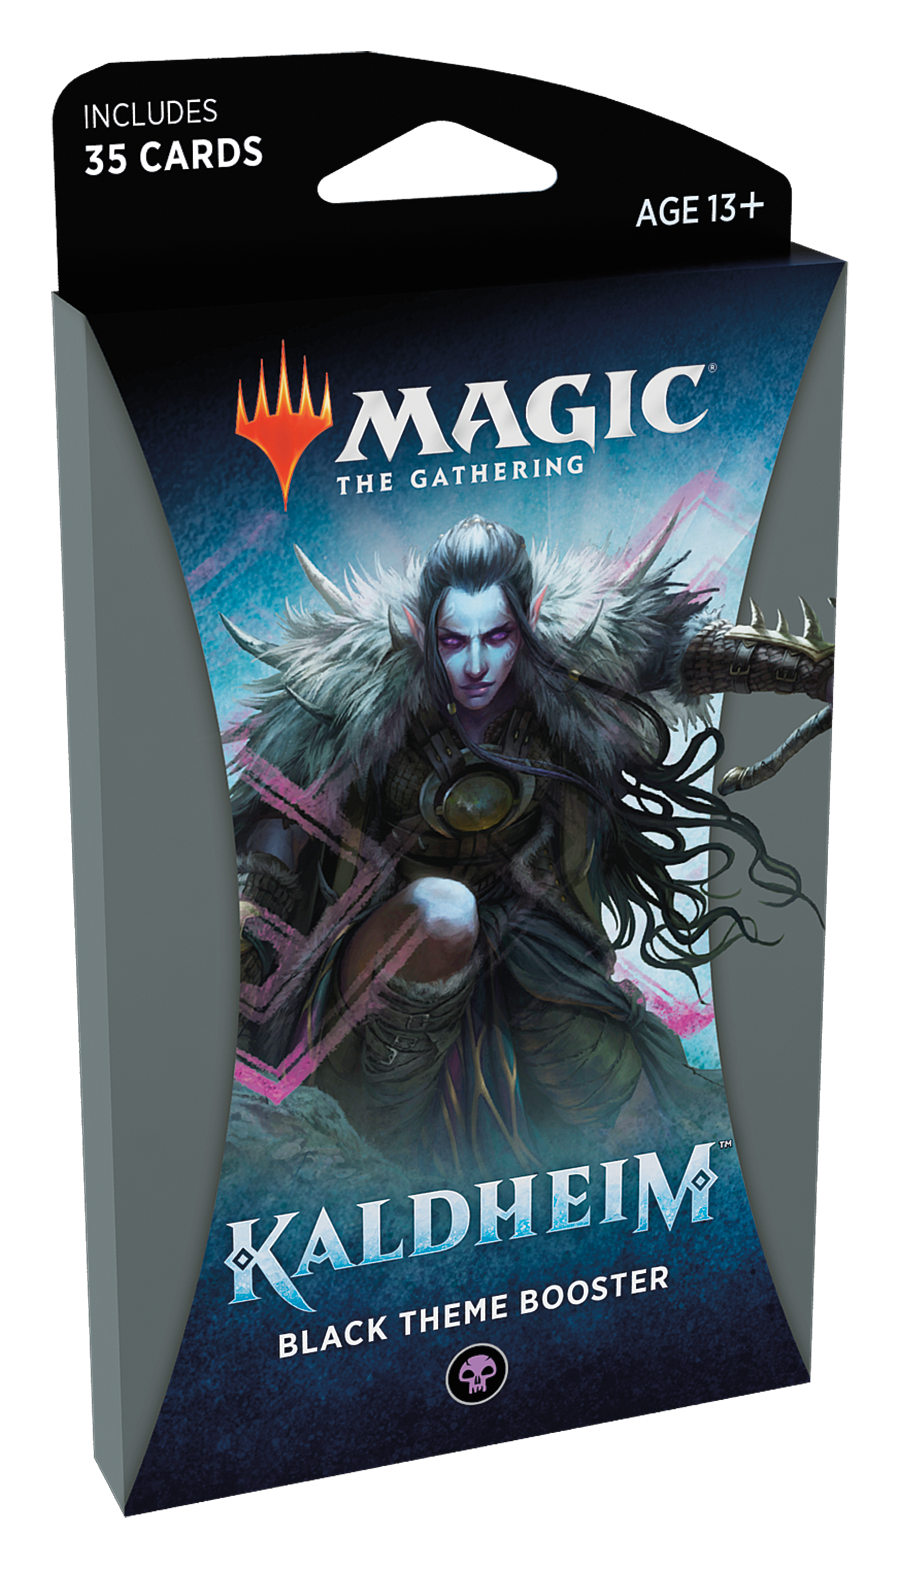 Magic the Gathering: Kaldheim Theme Booster